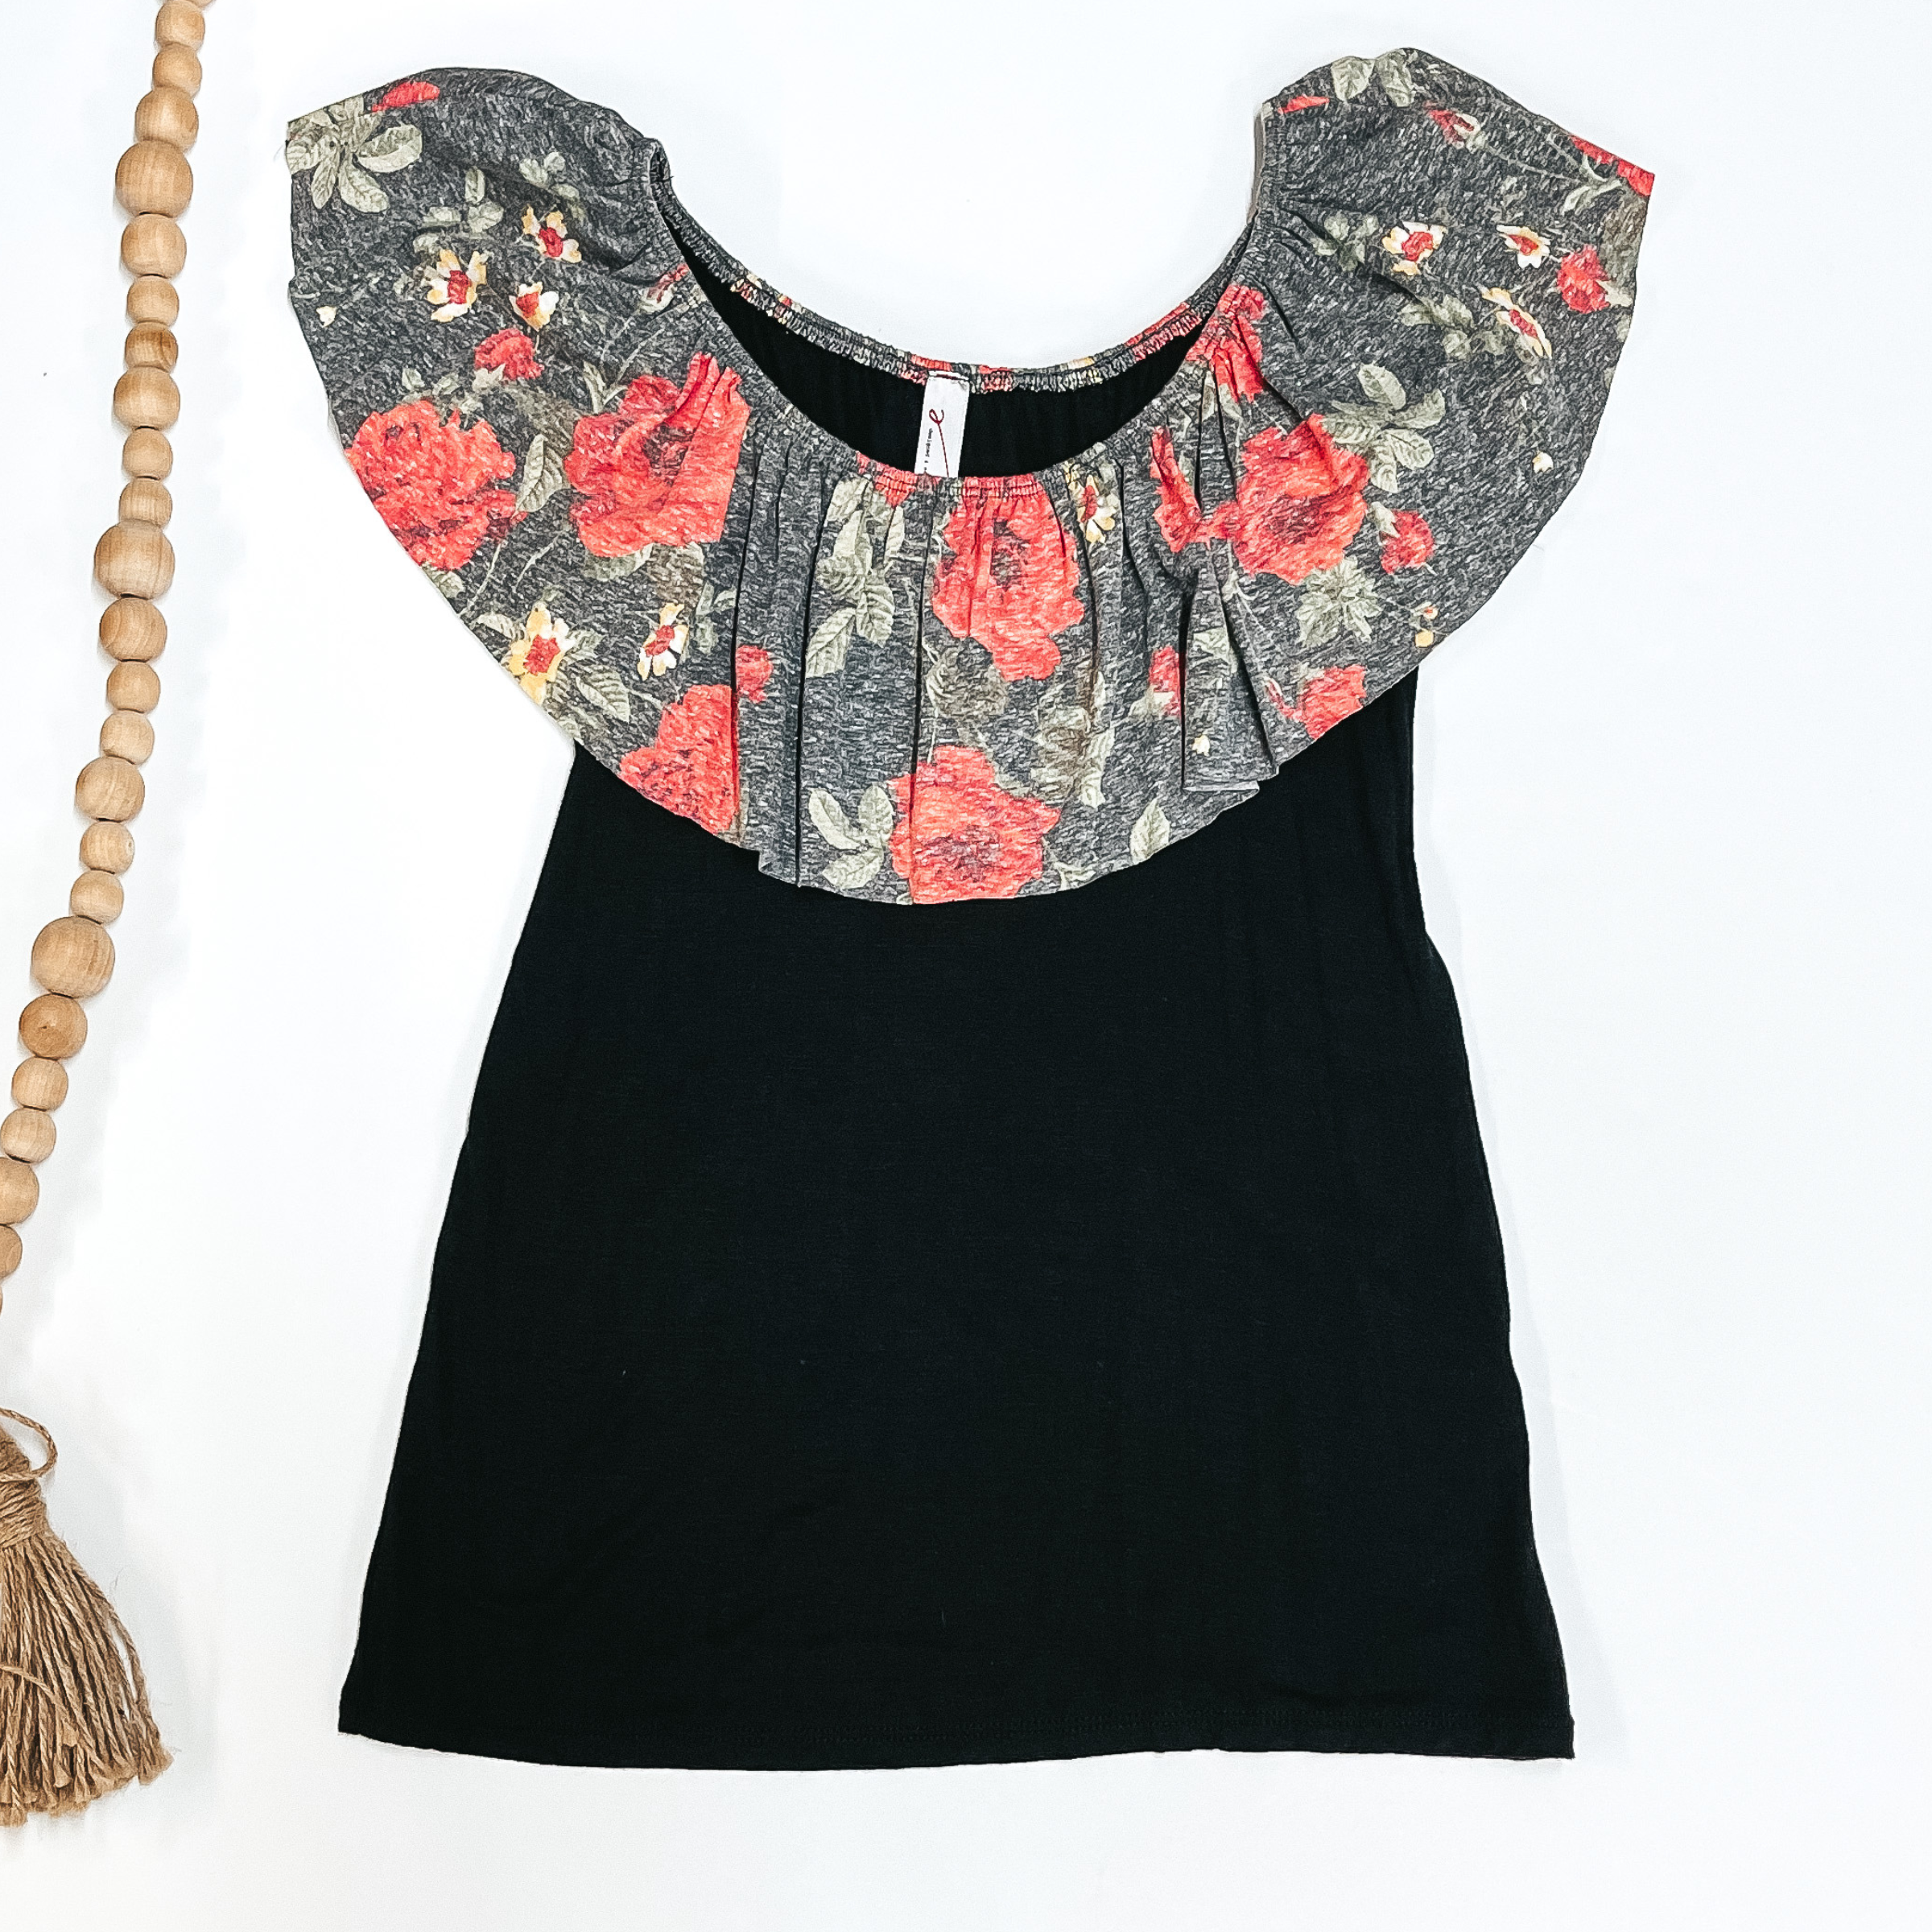 Black Top with Floral Off-Shoulder - Giddy Up Glamour Boutique